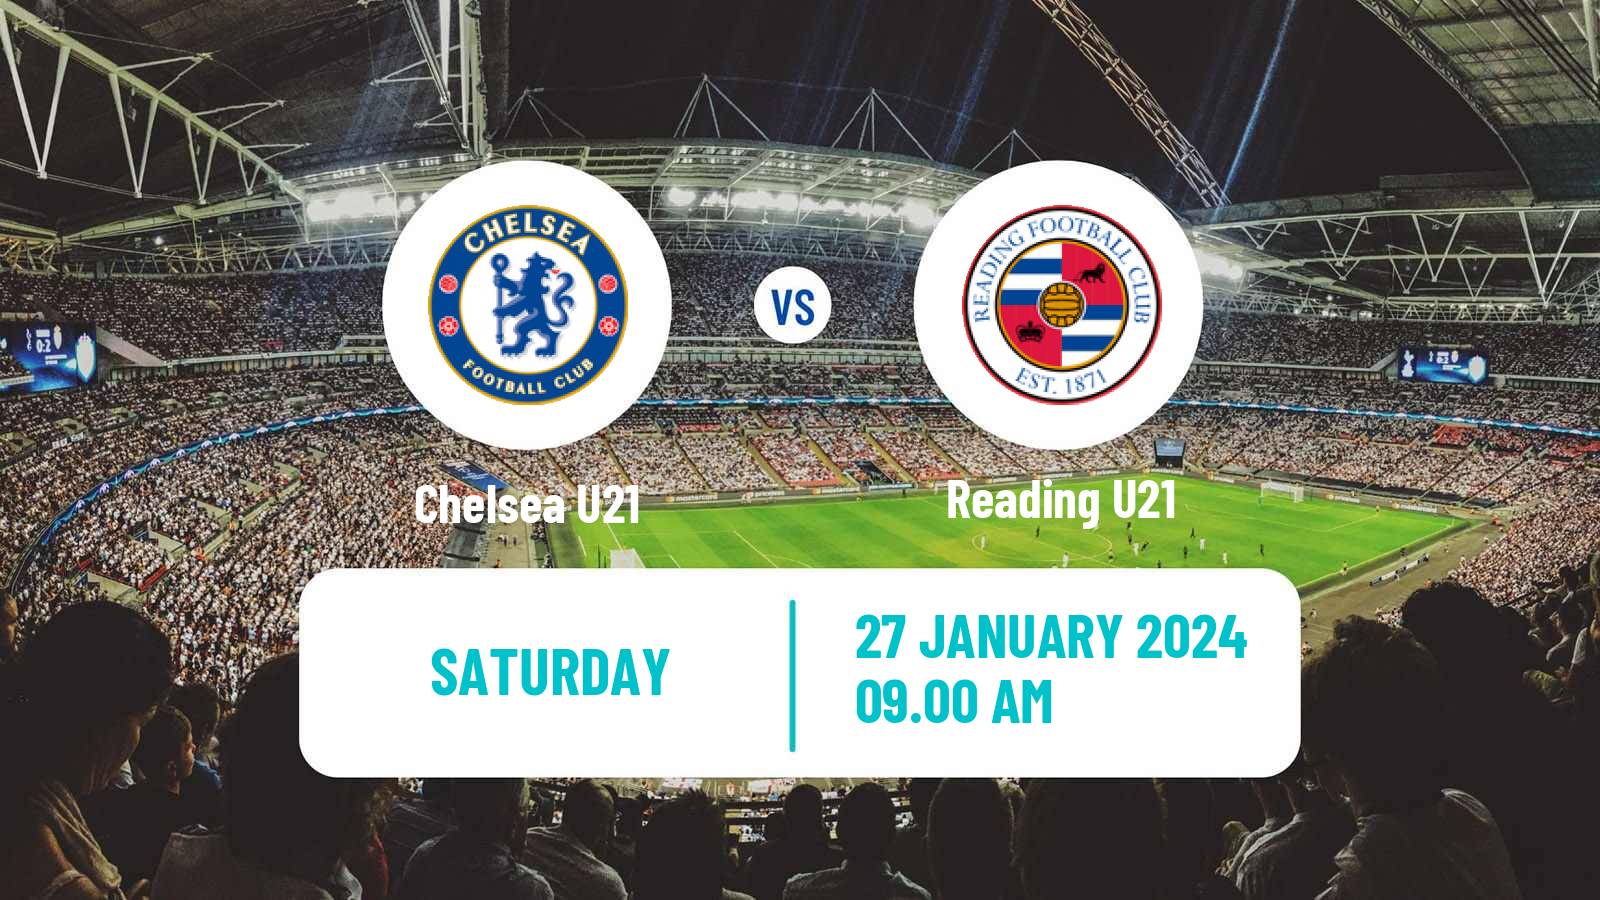 Soccer English Premier League 2 Chelsea U21 - Reading U21